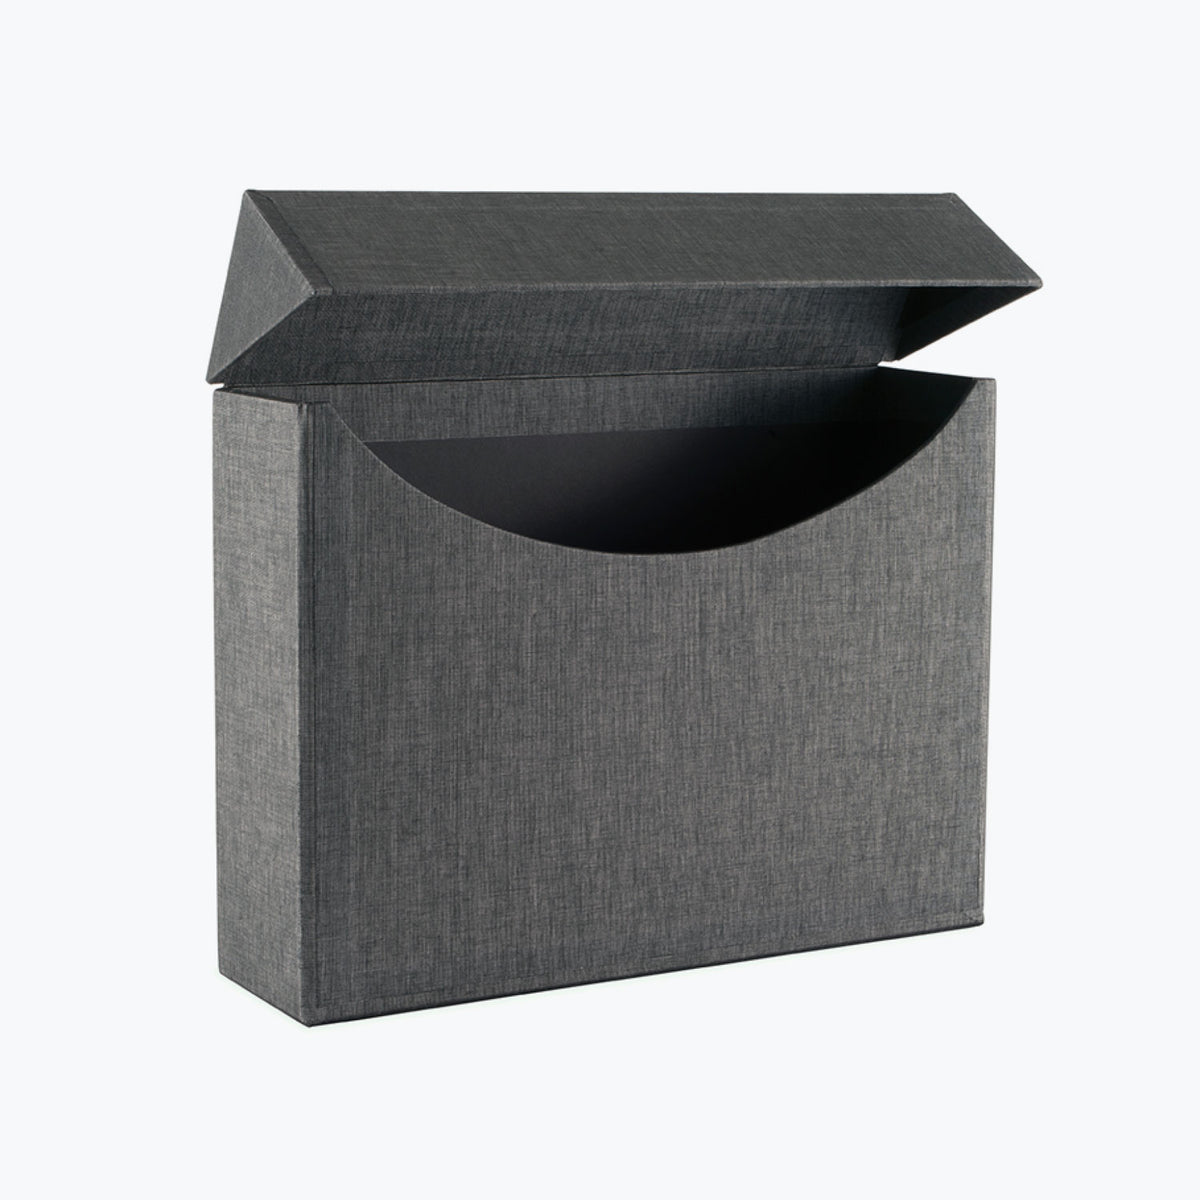 Bookbinders Design - Filing Box - A4 - Black/White